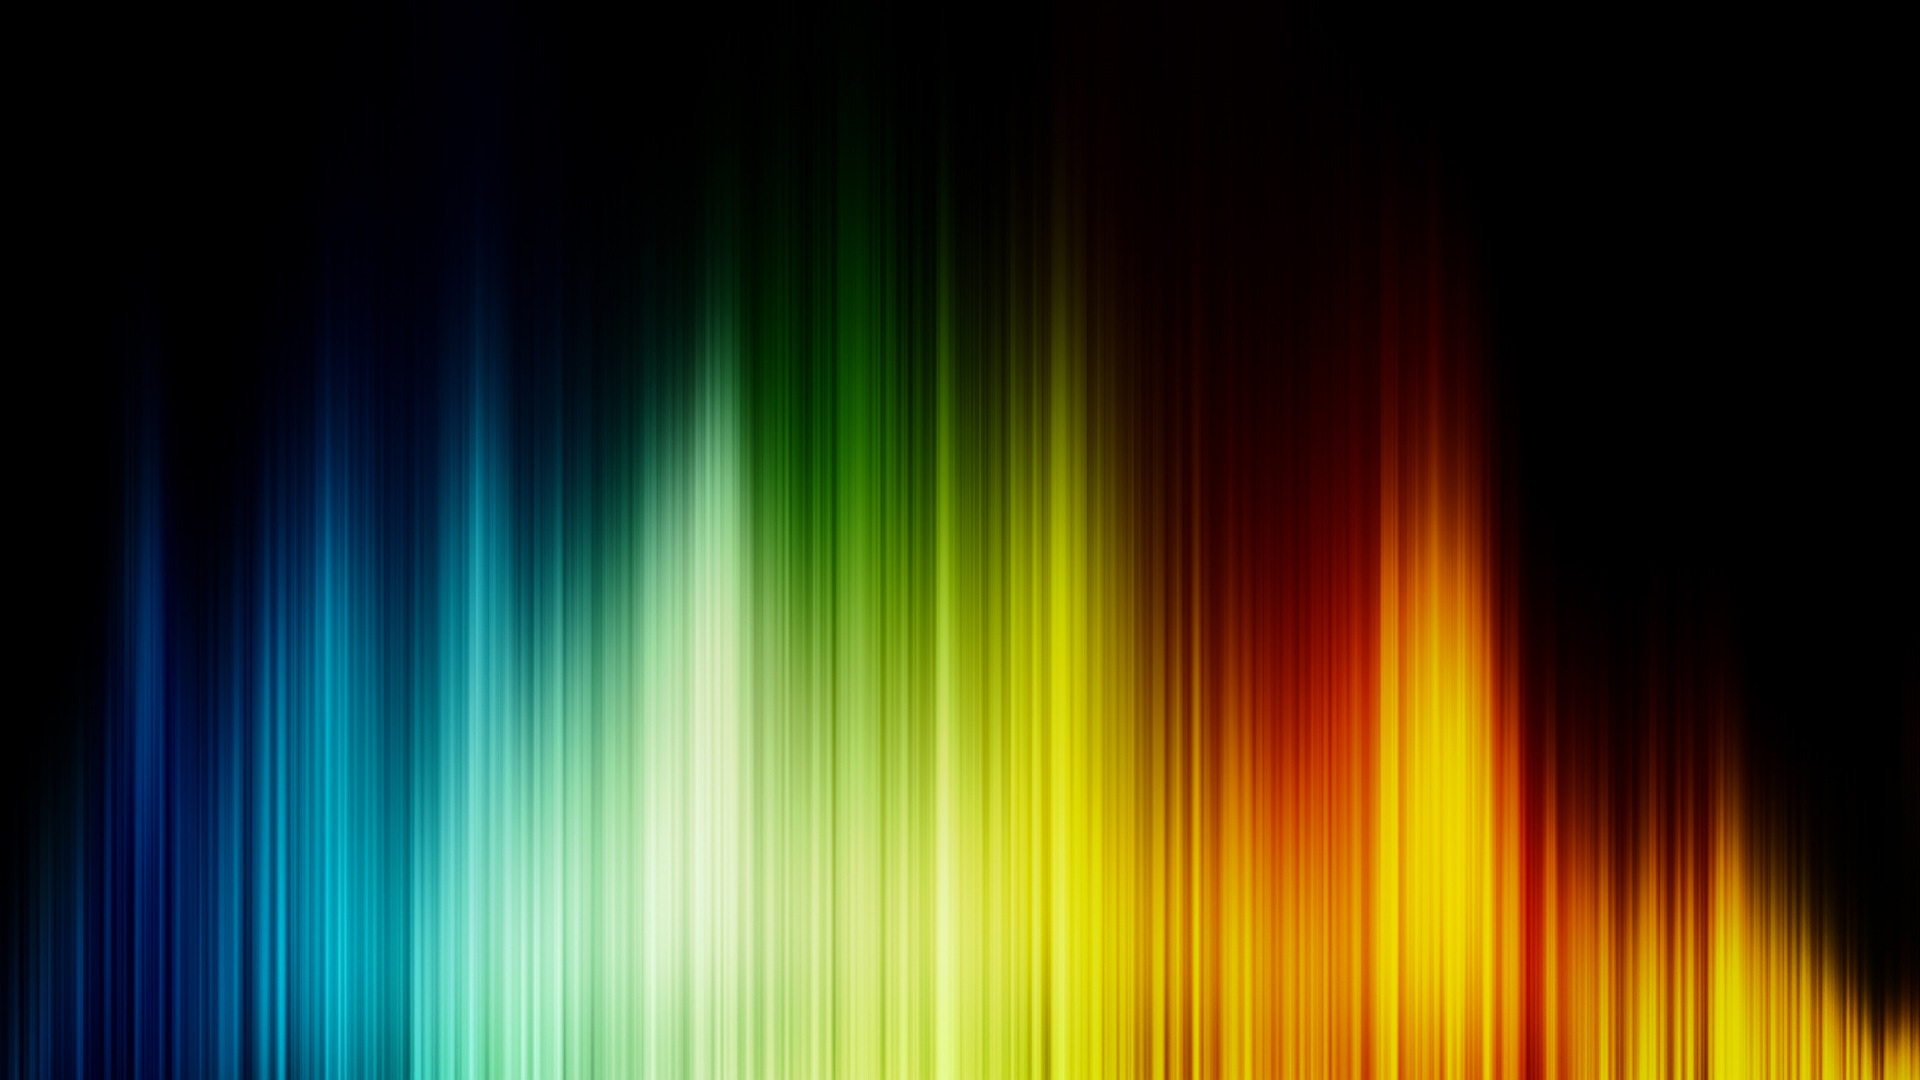 equalizer live wallpaper,green,blue,light,yellow,orange